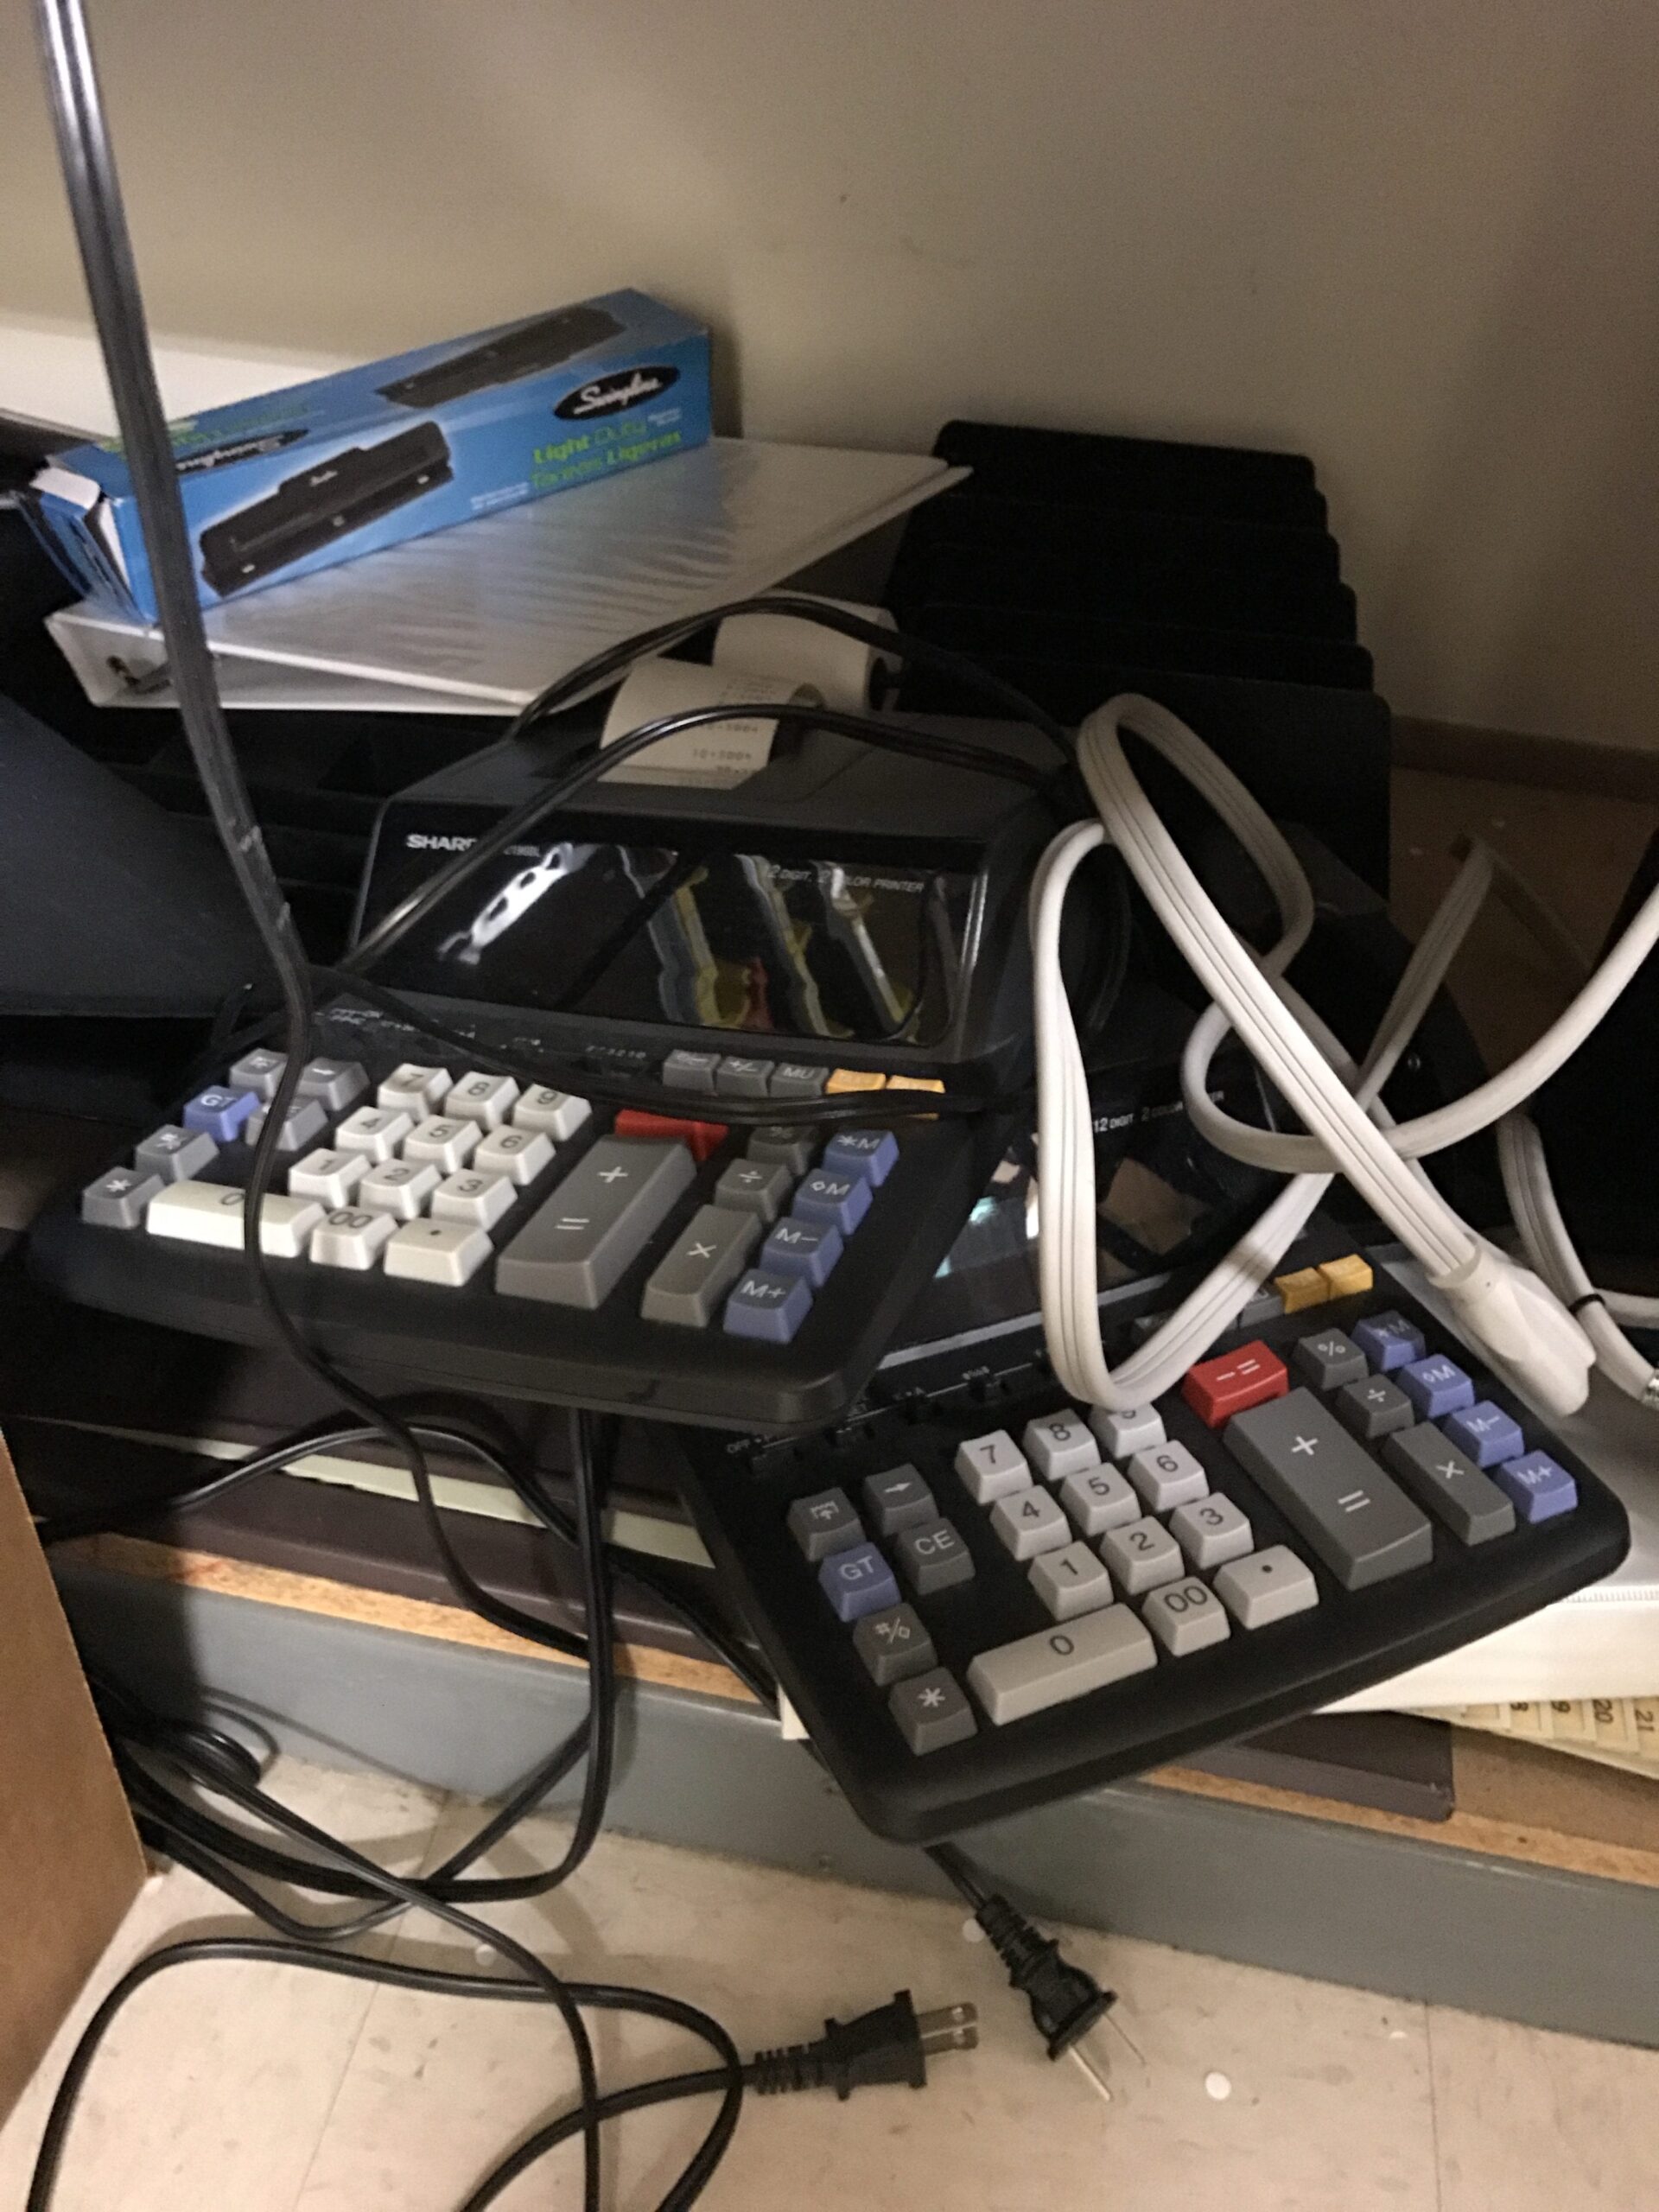 Discarded 10 key calculators